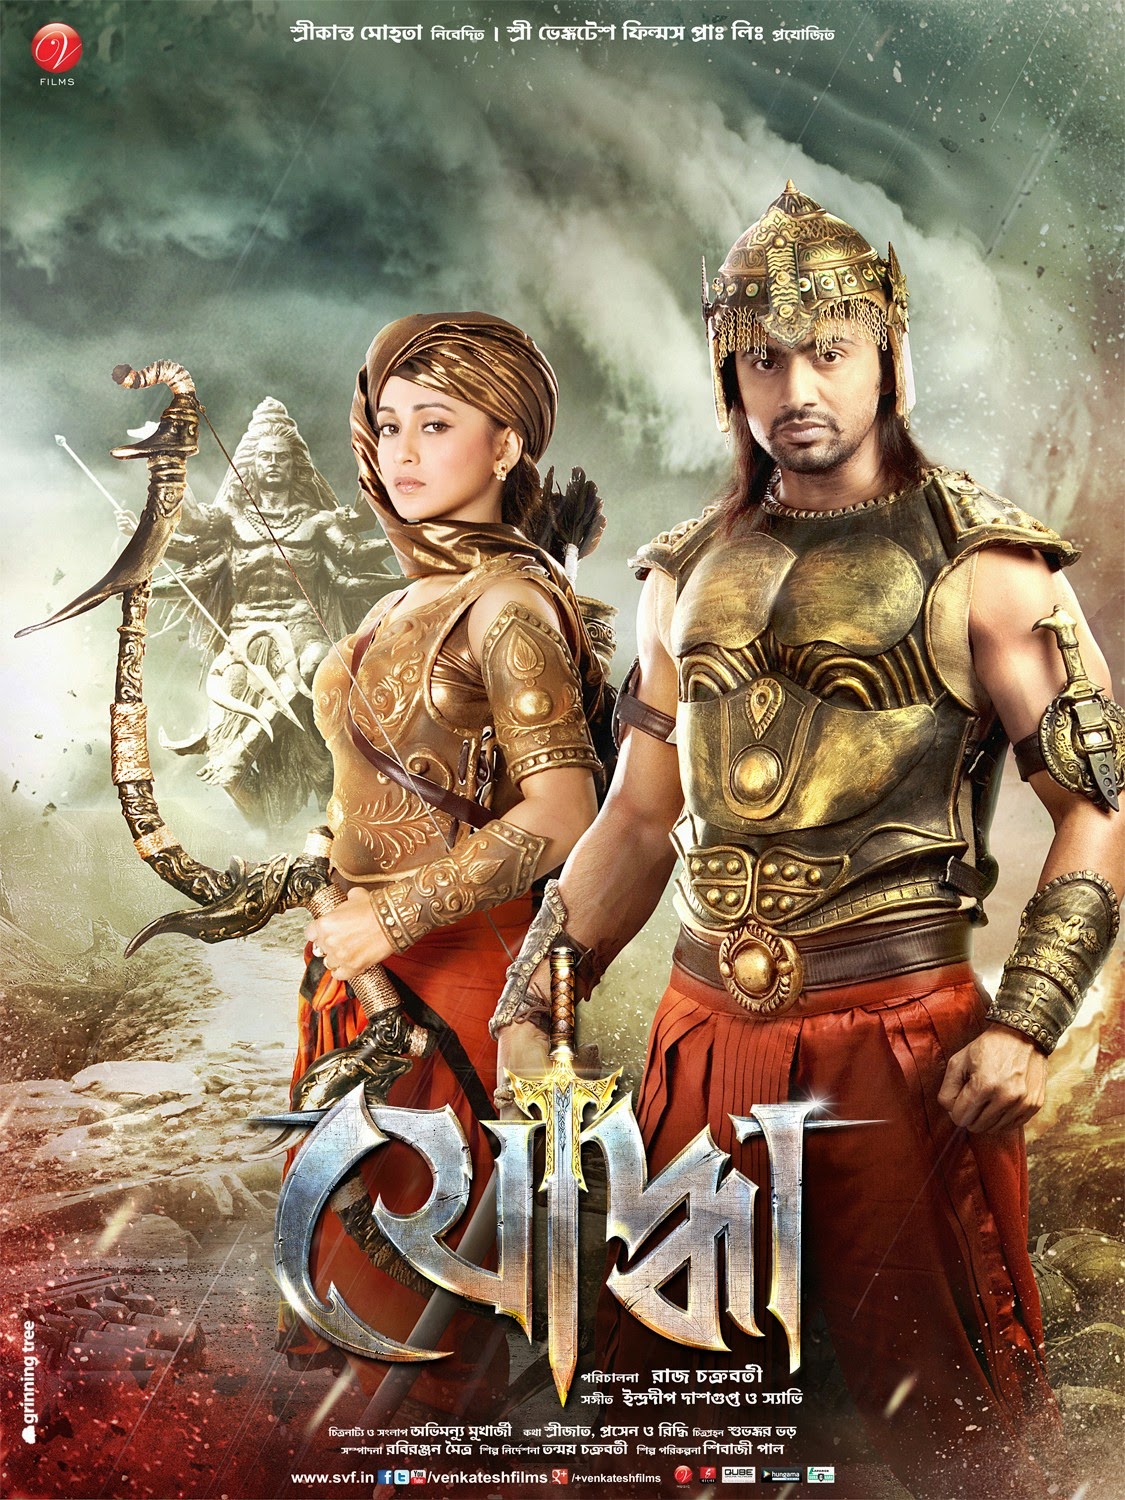 The Hero - Abhimanyu Full Free Download